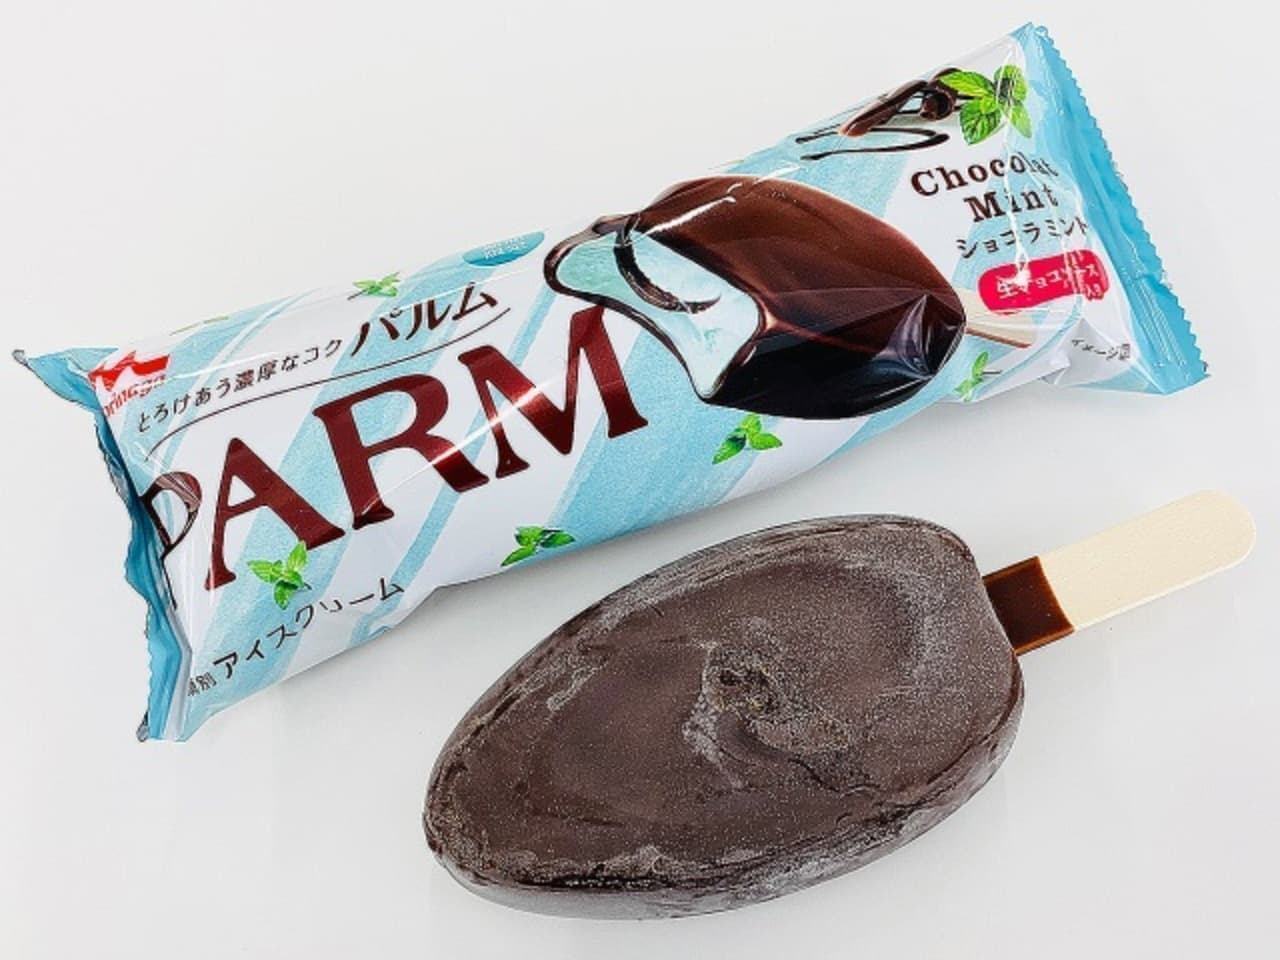 7-ELEVEN "Morinaga Palm Chocolat Mint